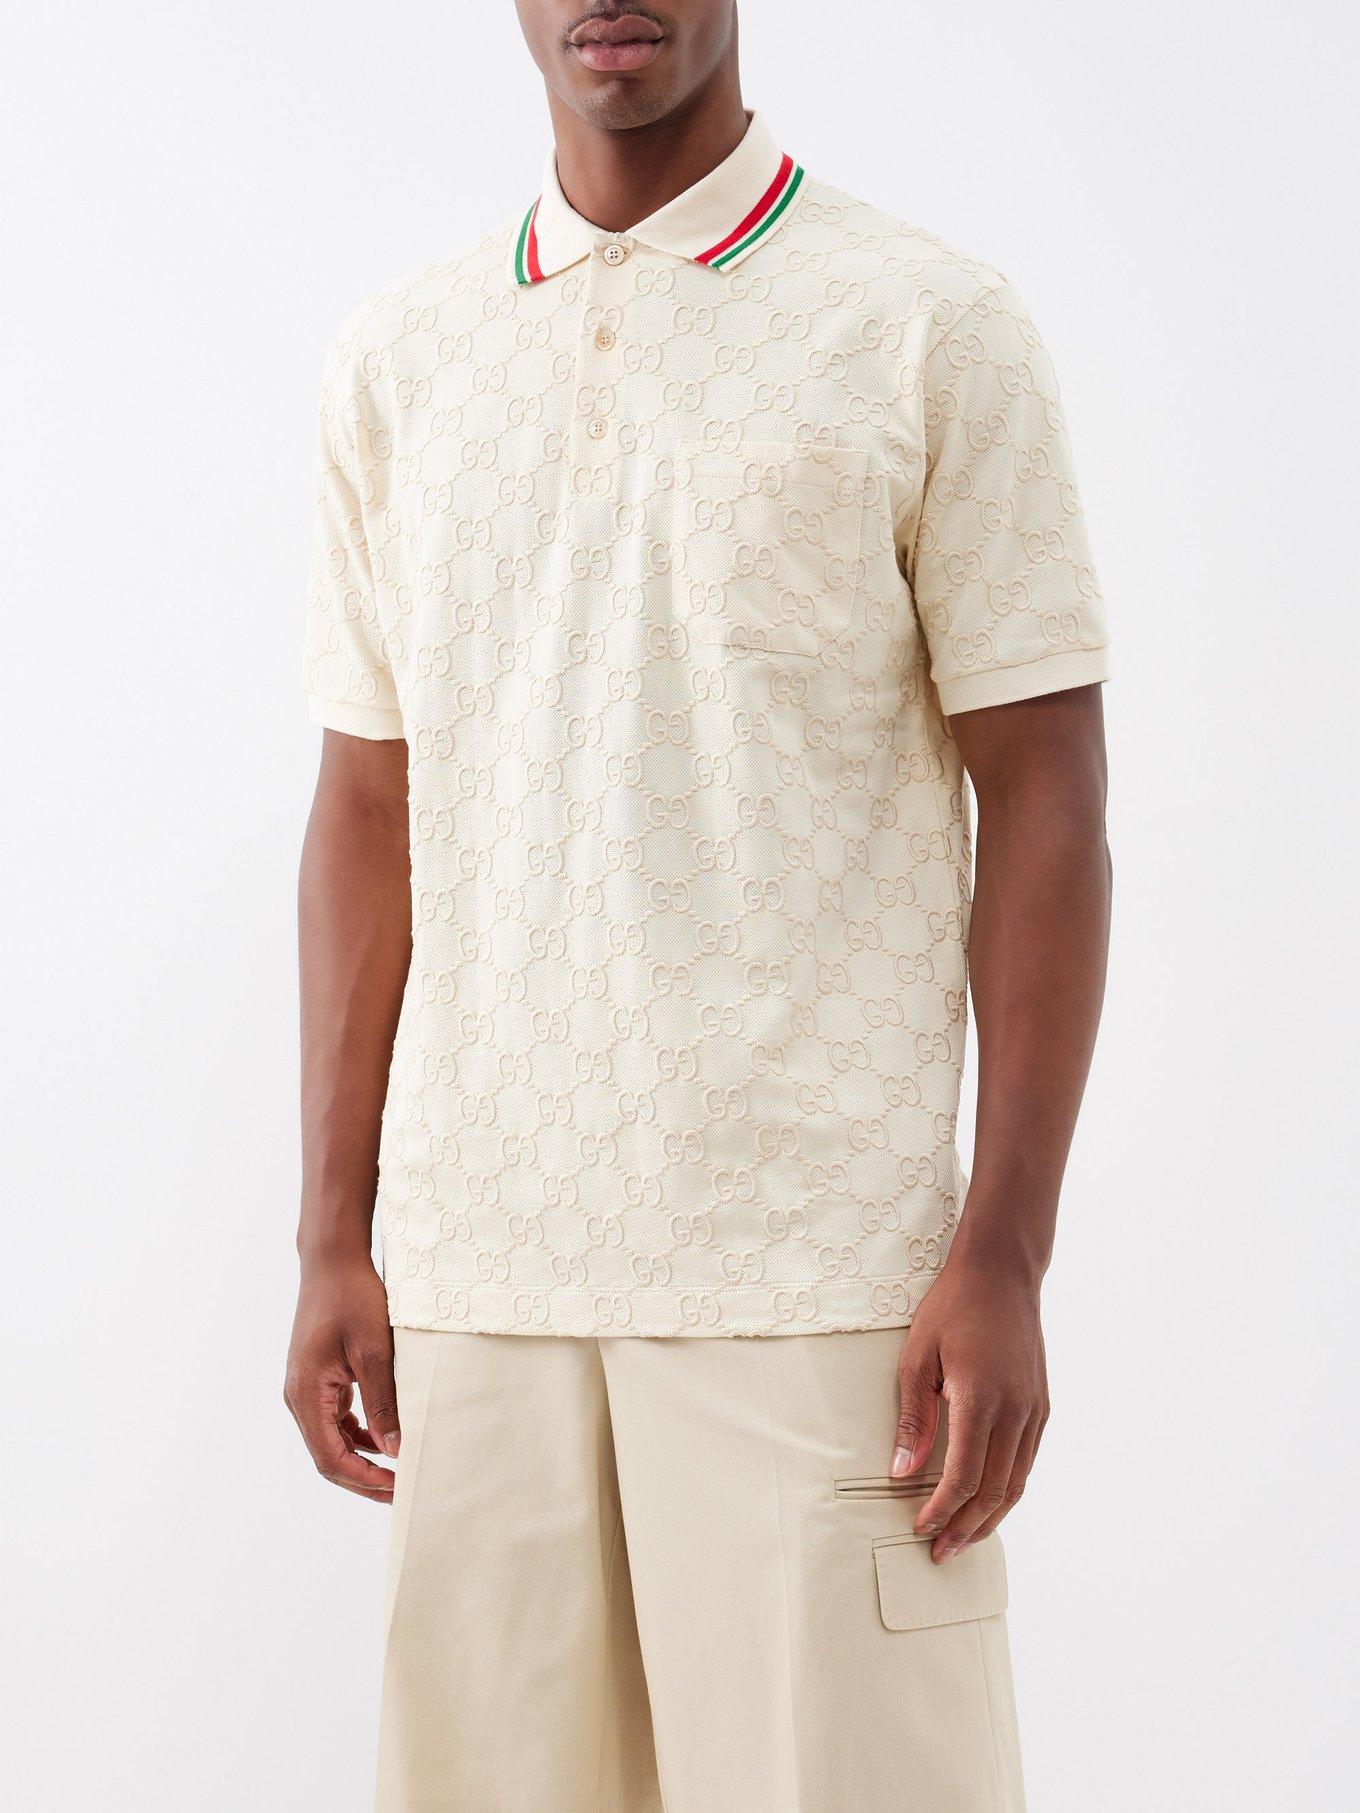 Gucci Polo Shirts for Men, Gucci polo Tops